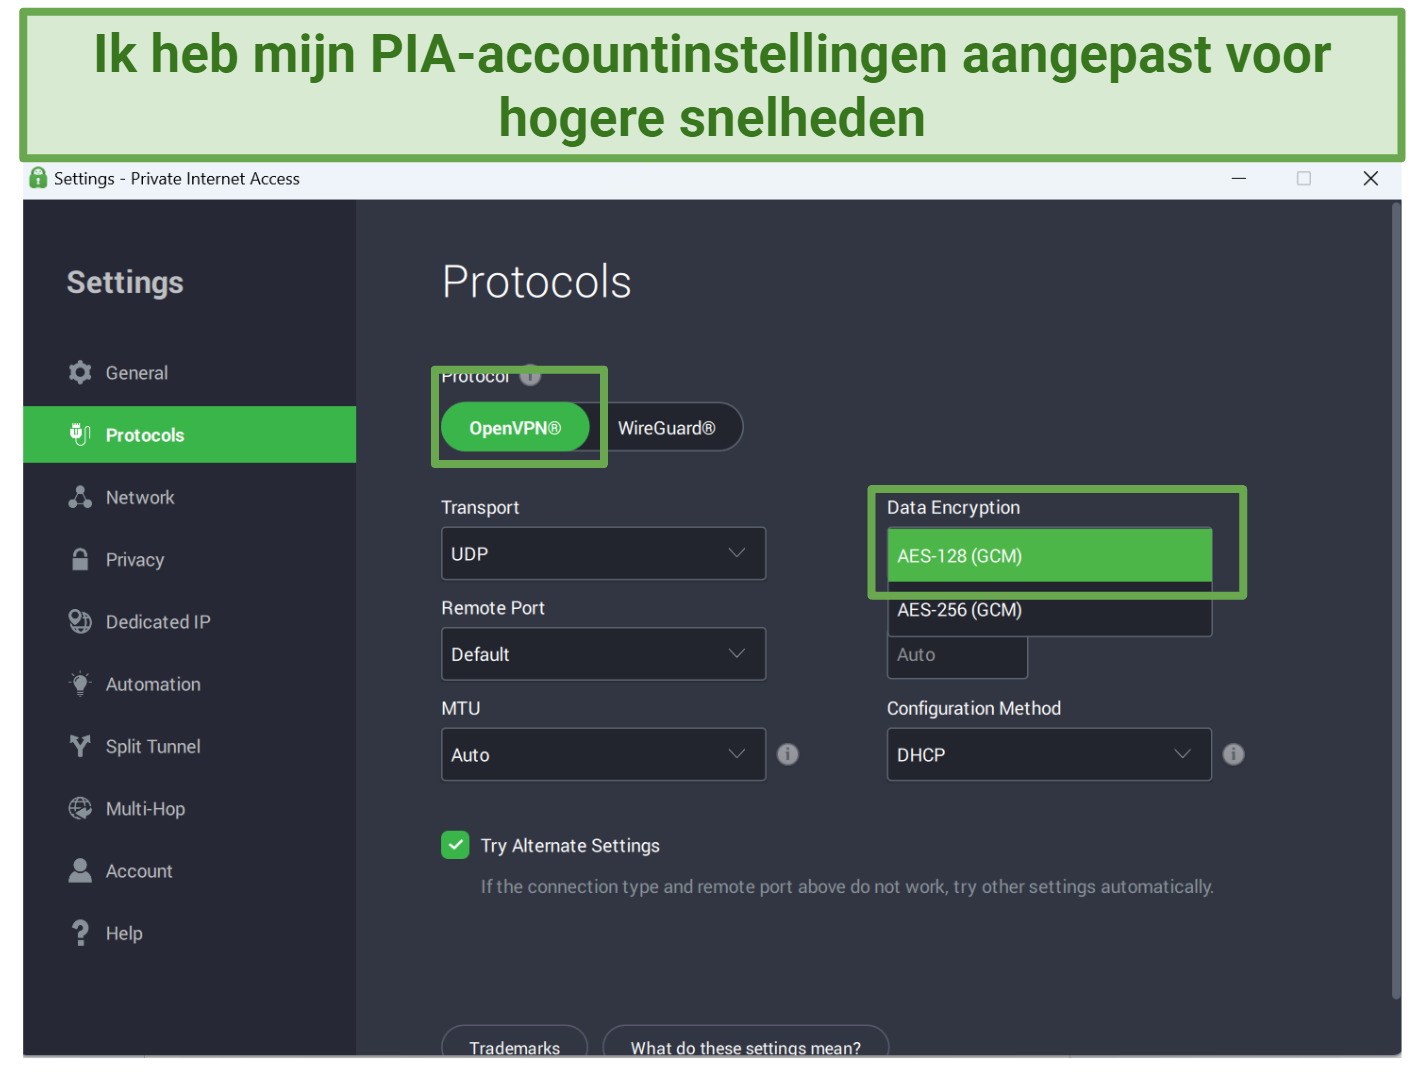 A screenshot showing PIAs customizable security protocols